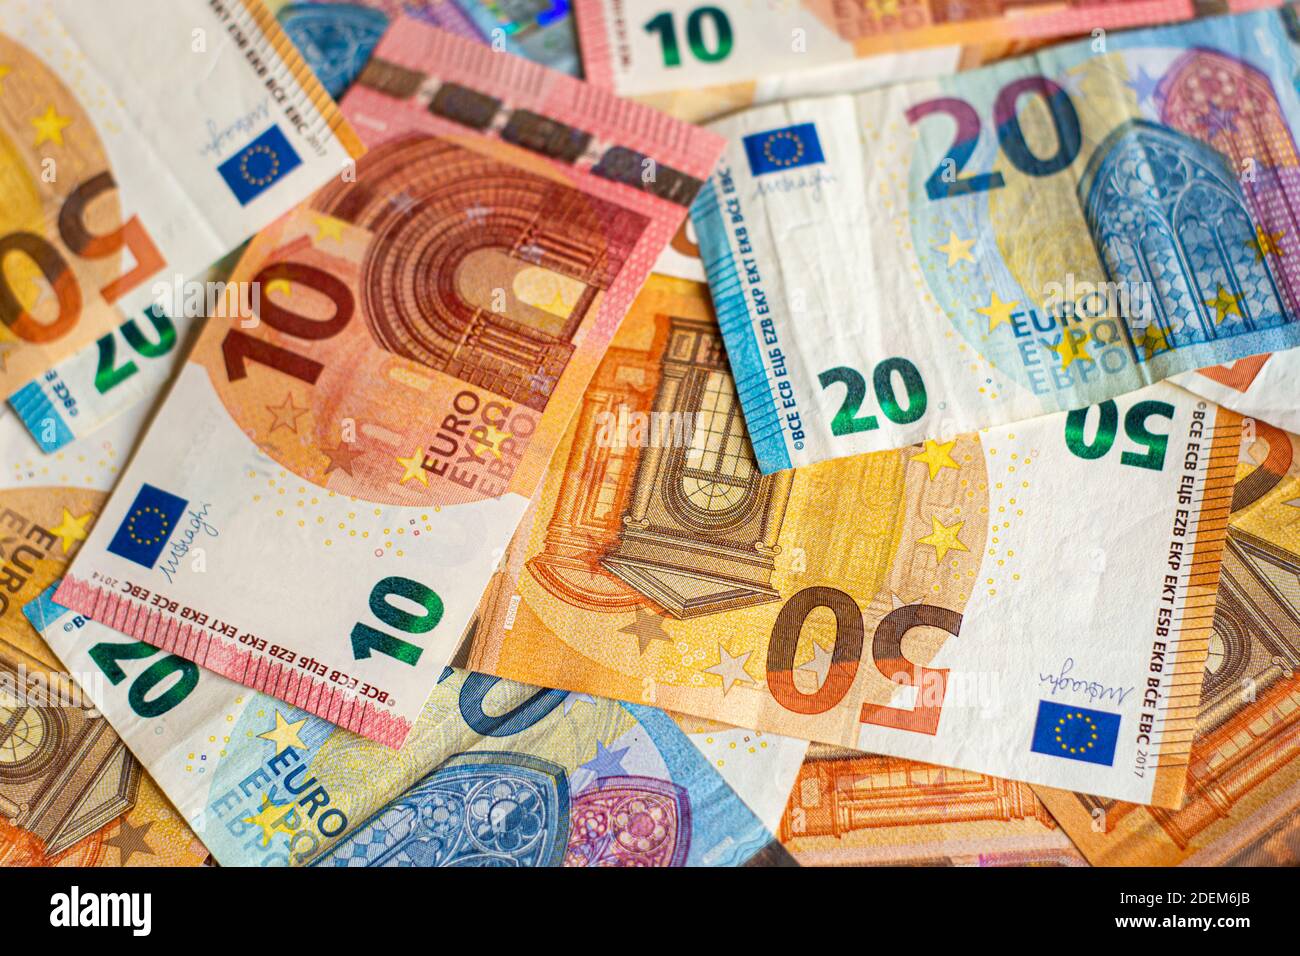 Euro money, 10, 20, 50 euro banknotes background, face value 10, 20, 50  euros Stock Photo - Alamy